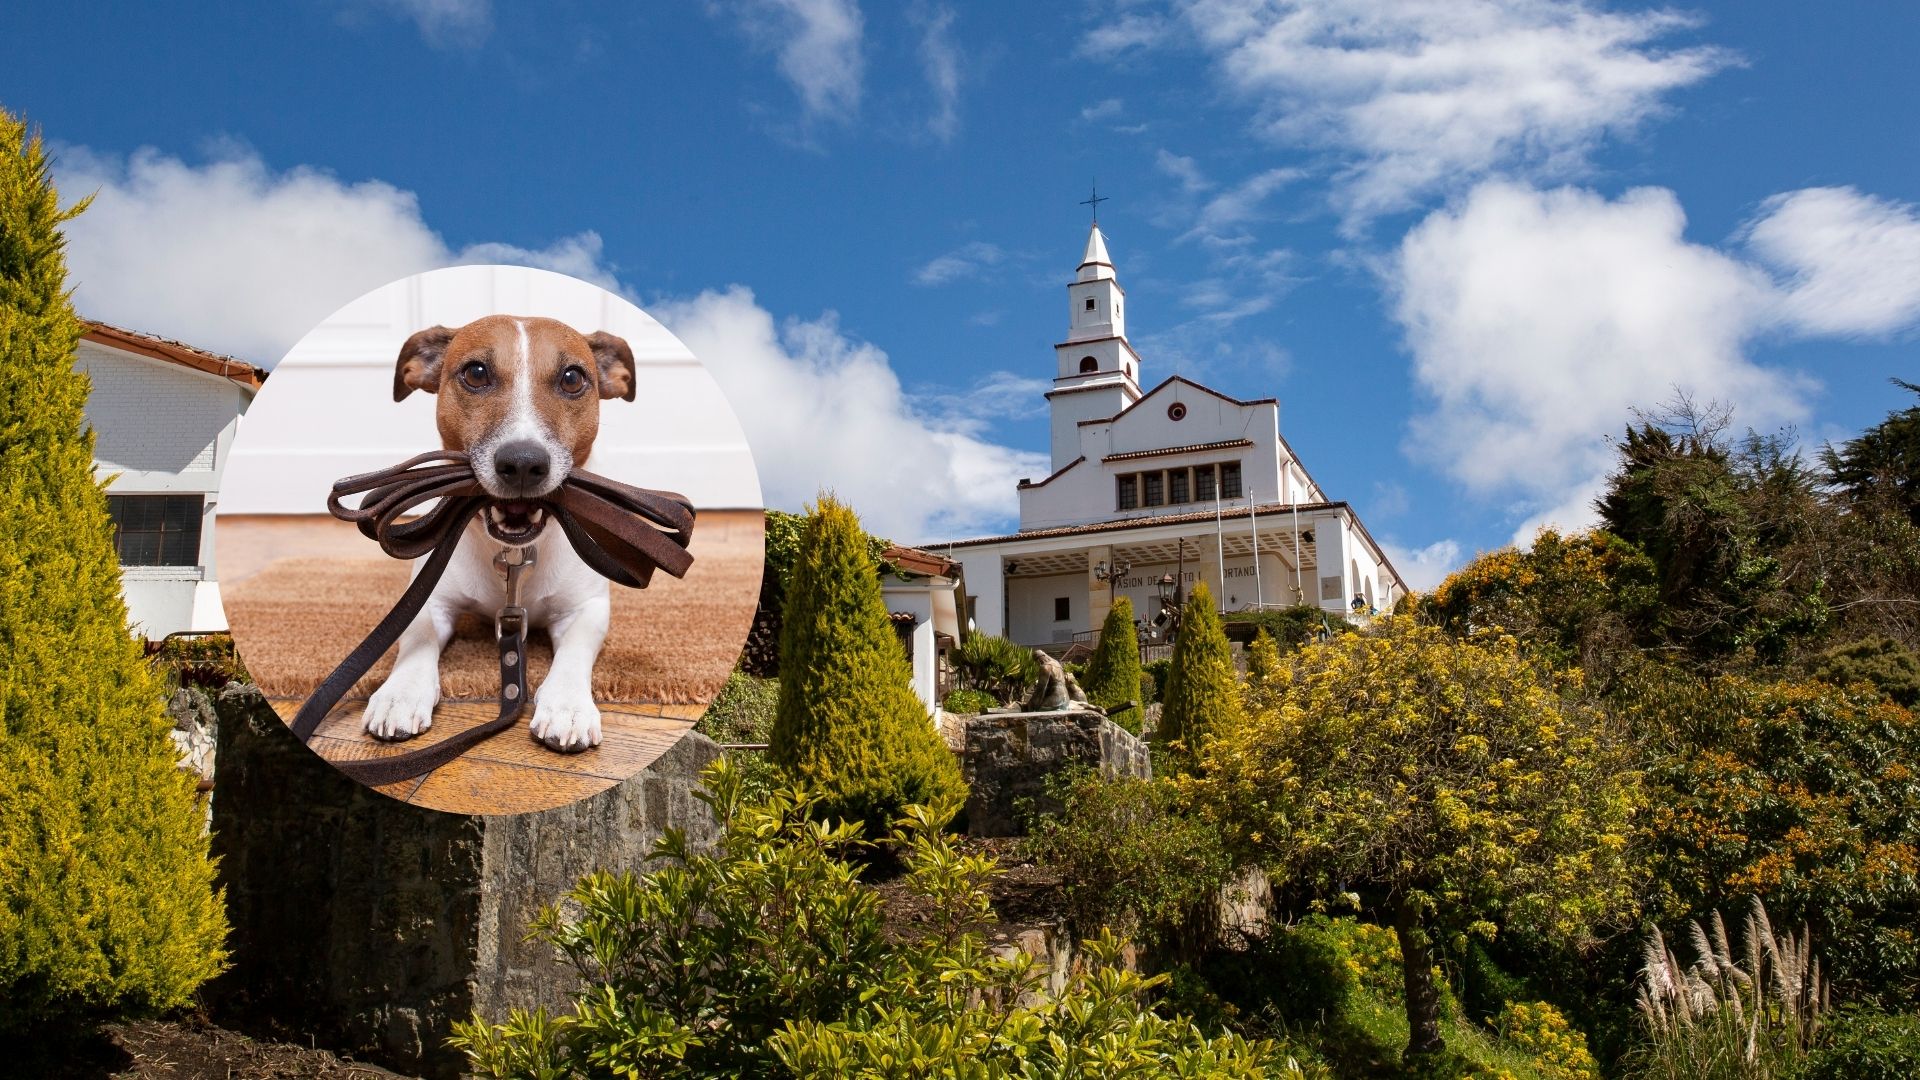 Imagen de perrito y Monserrate por nota sobre permiso para llevar mascotas a Monserrate en Semana Santa